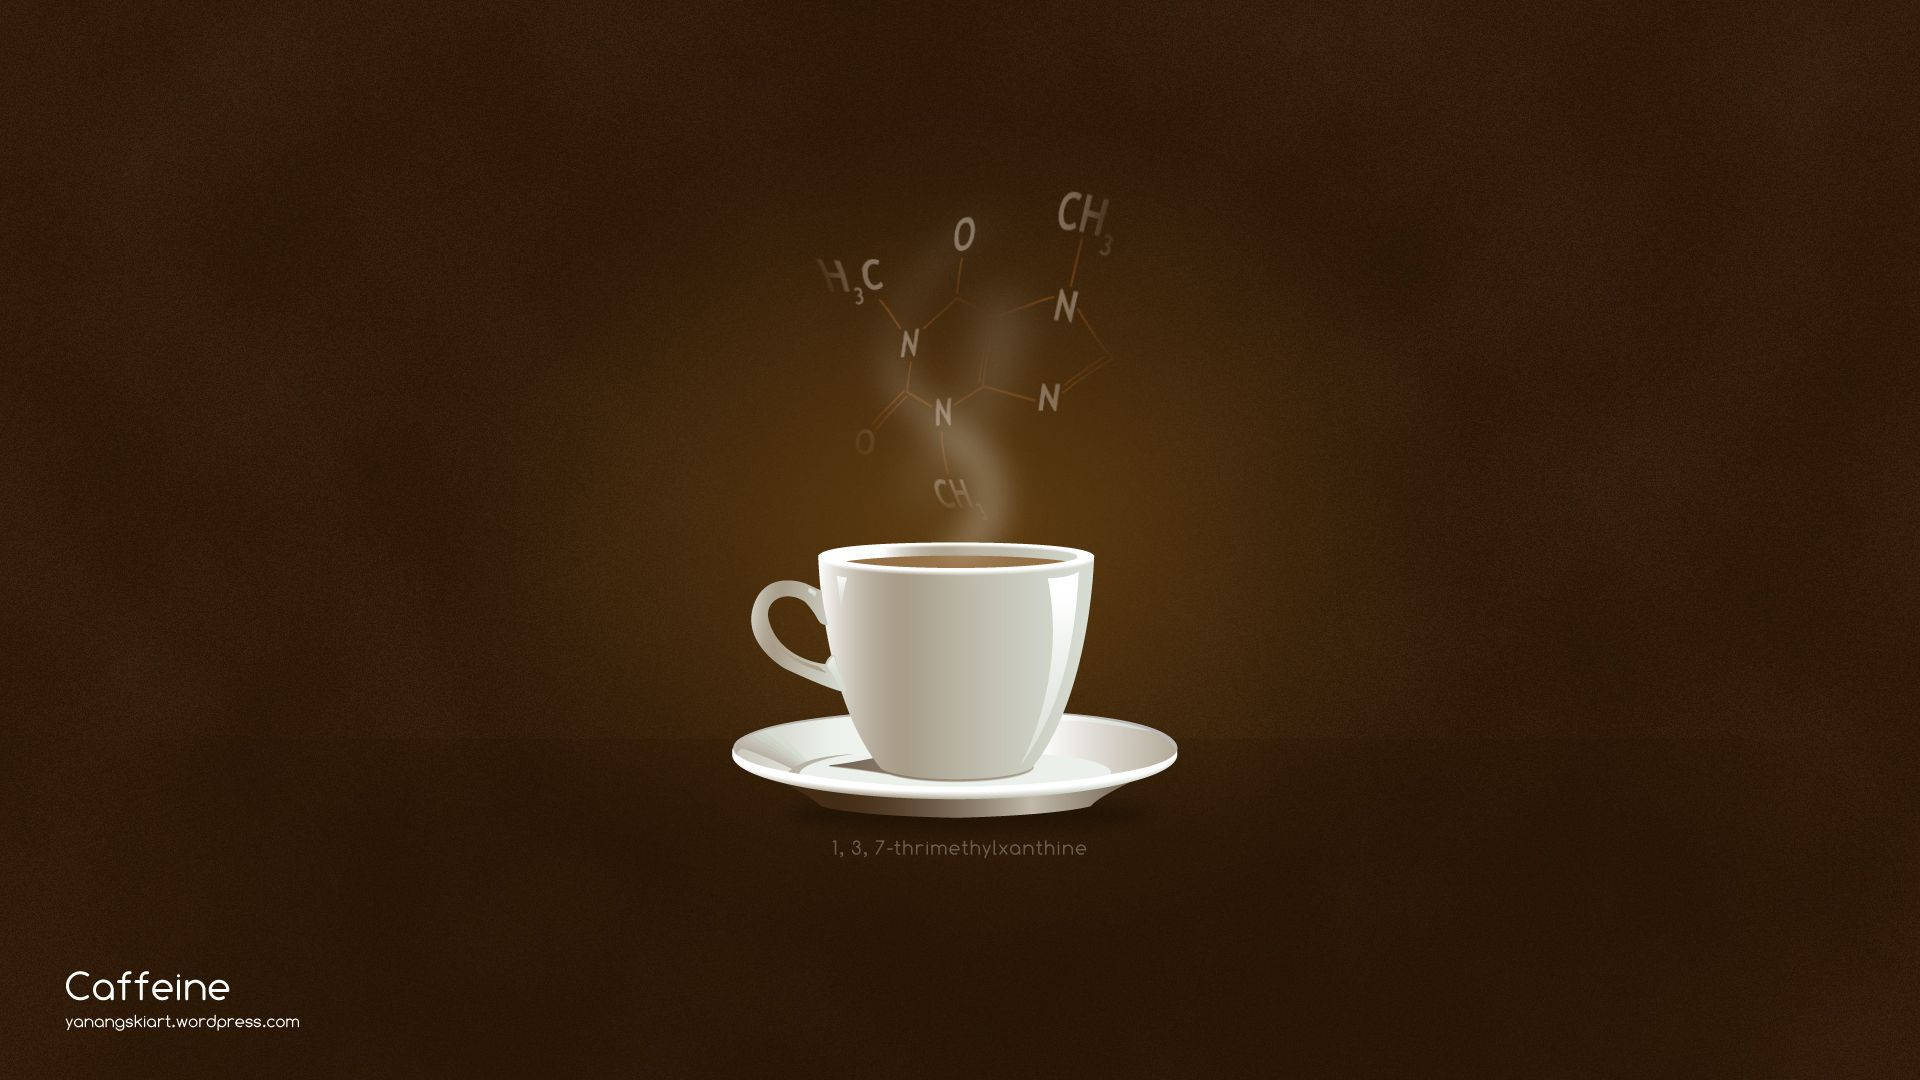 The Chemistry of Caffeine Wallpaper